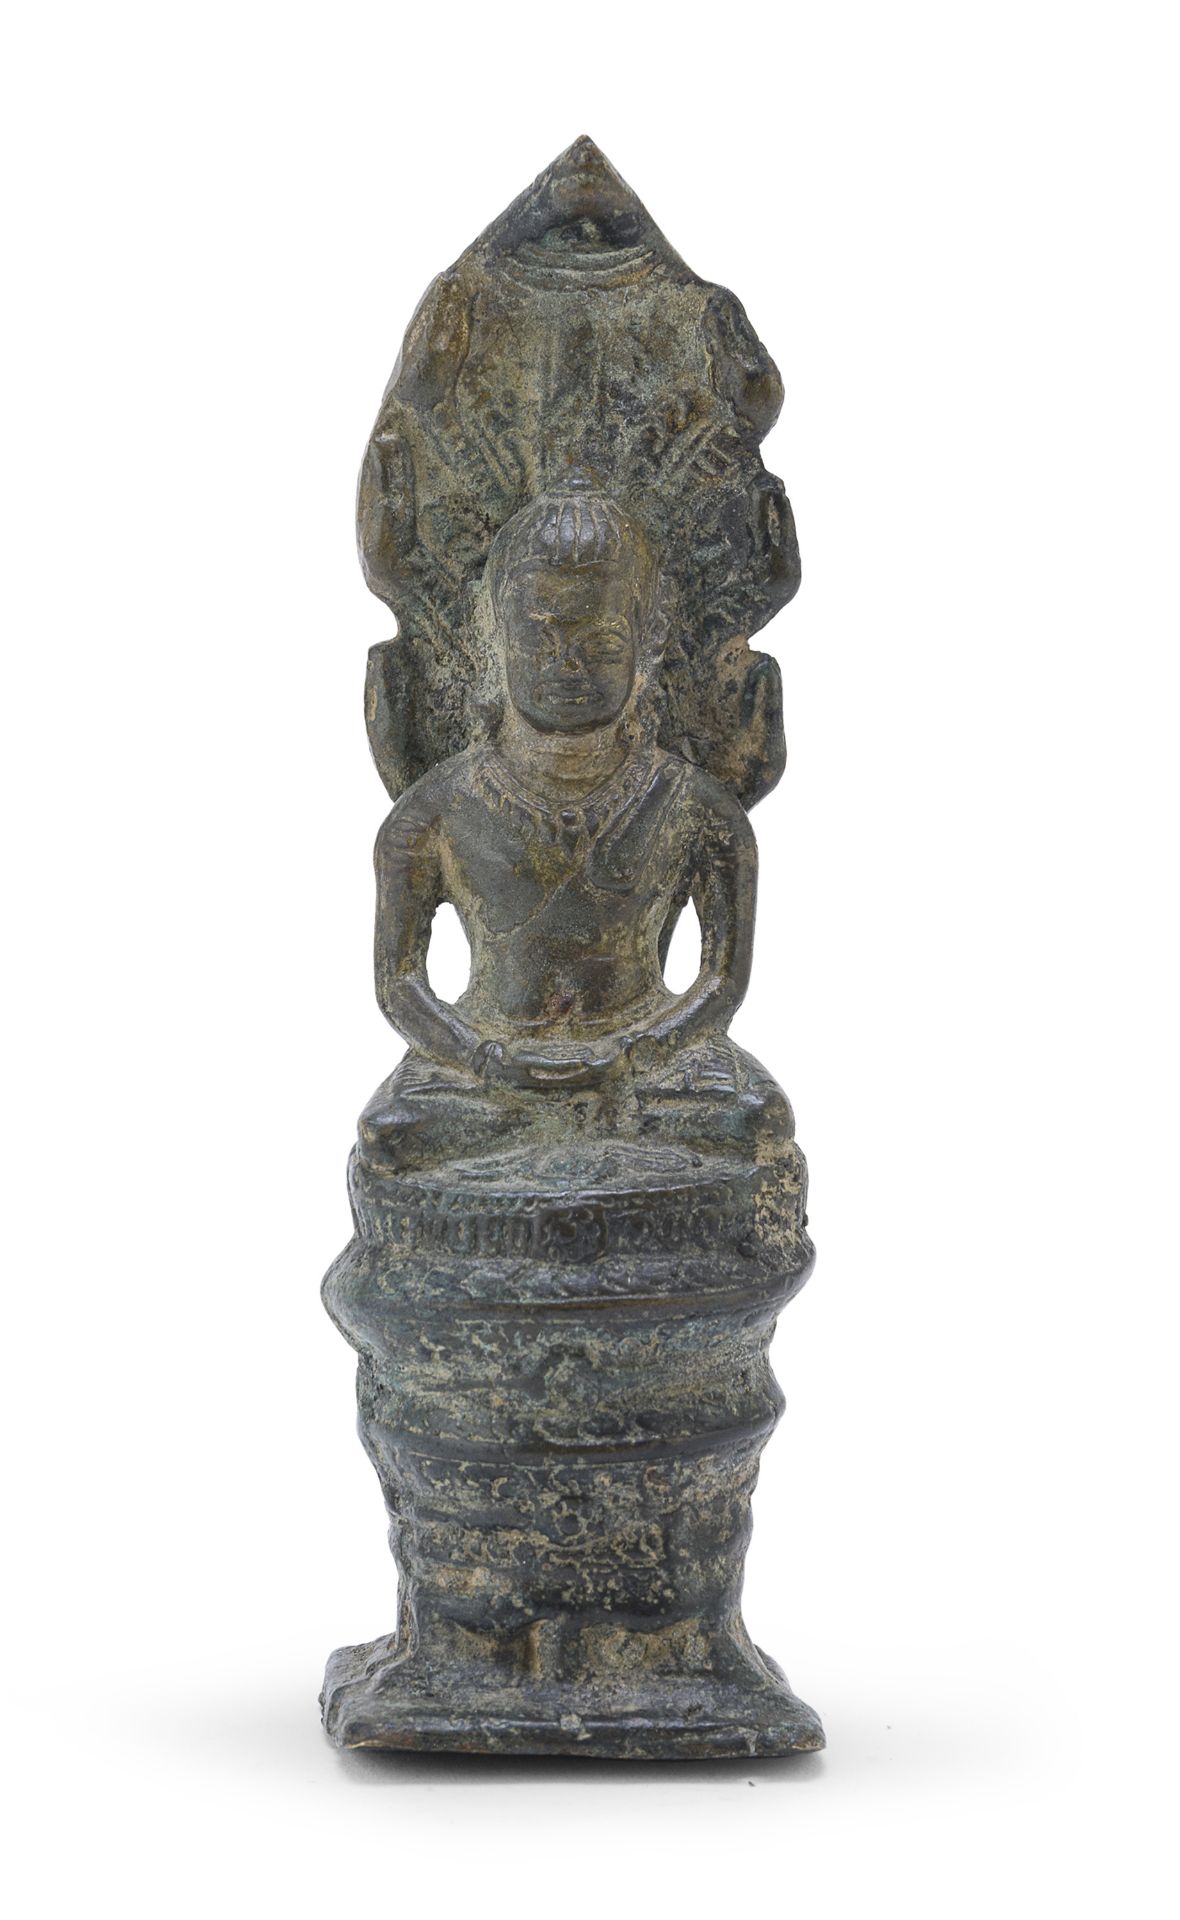 A BRONZE SCULPTURE DEPICTING BUDDHA CAMBODIA 20TH CENTURY